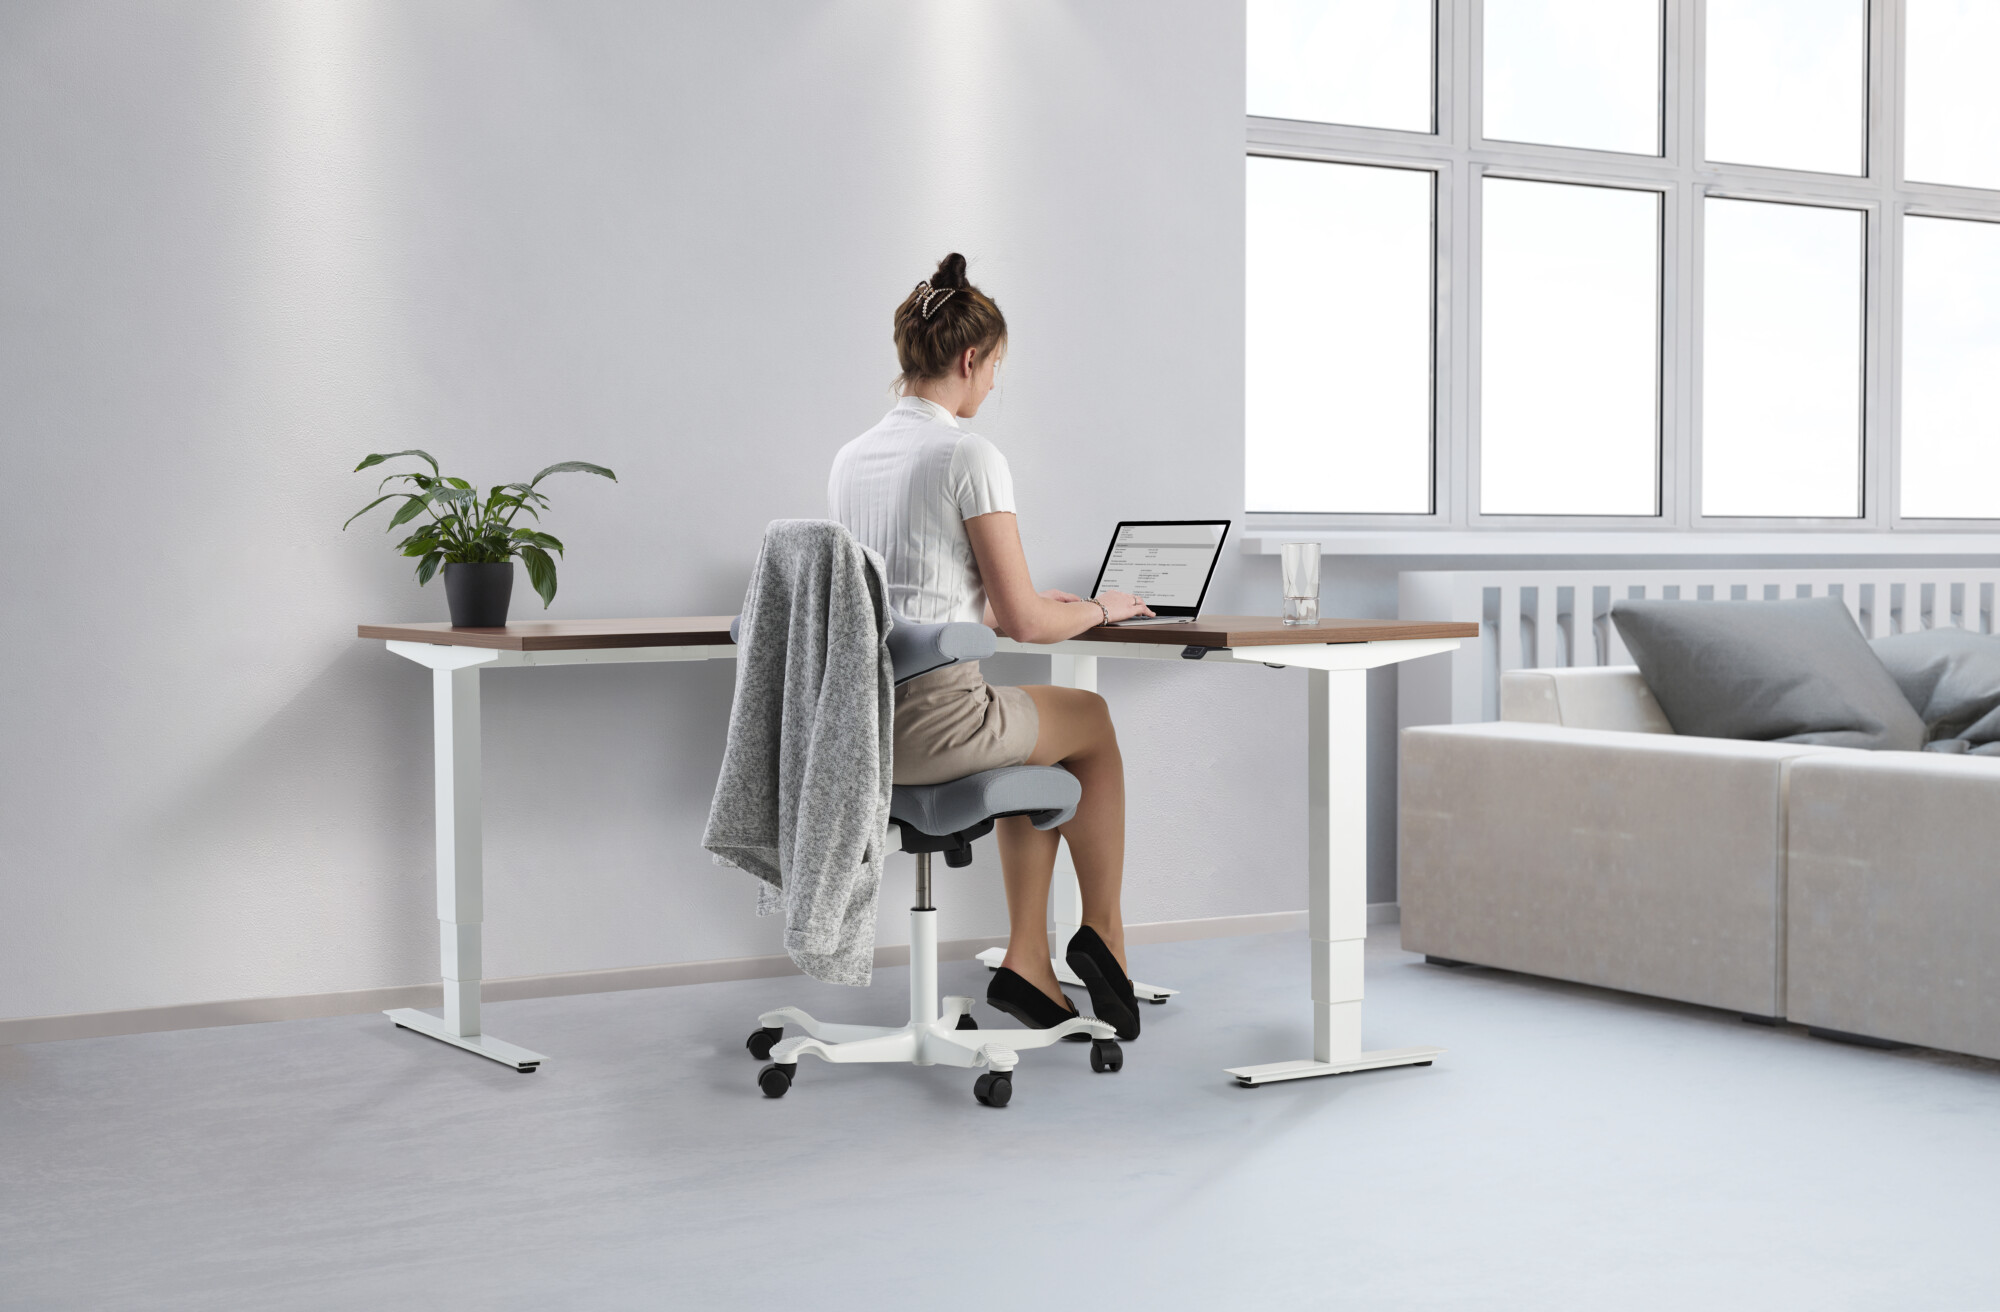 Heigth adjustable desks promote healthier working environments. 